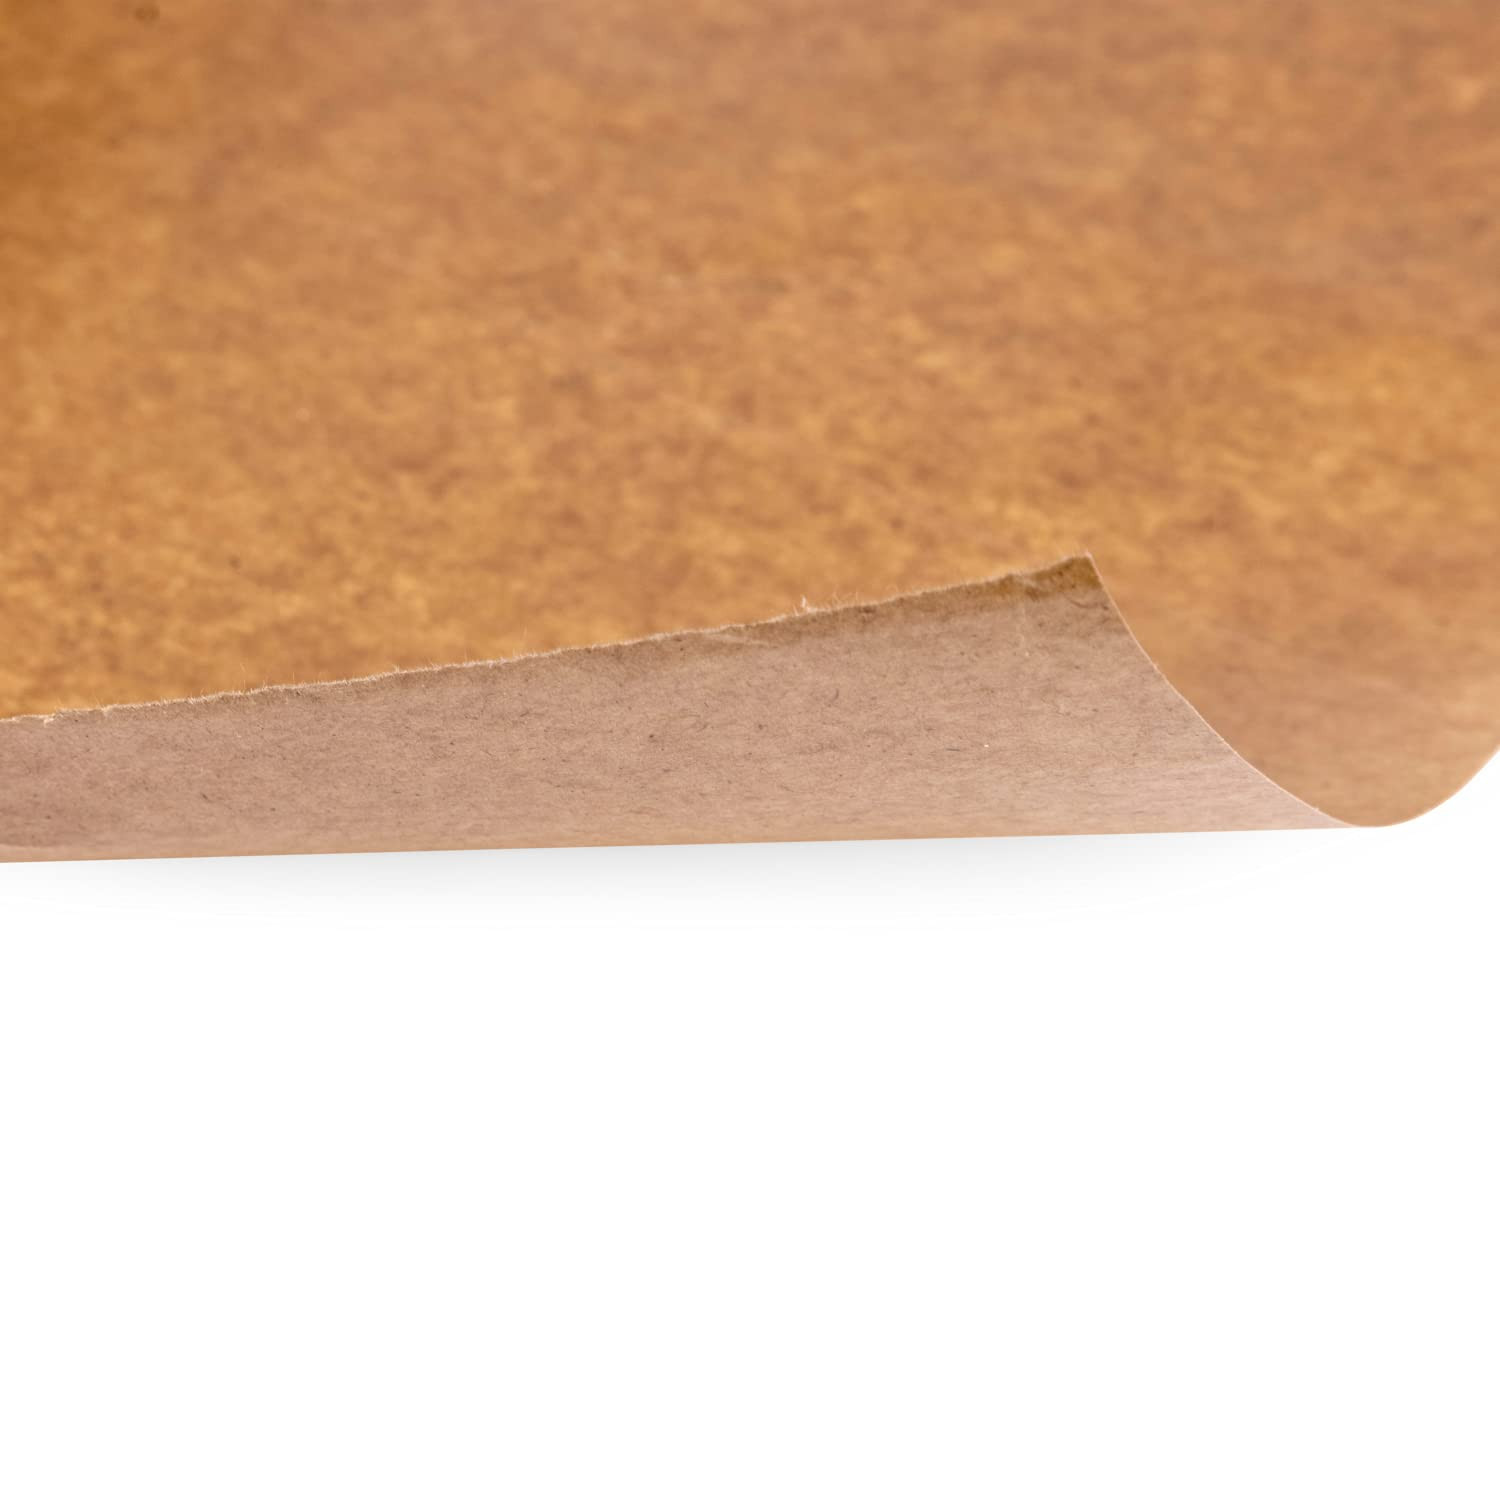 18 x 900' PFAS Free Wet Wax Paper Roll, Food-Safe Wax Water Resistant  Paper buy in stock in U.S. in IDL Packaging